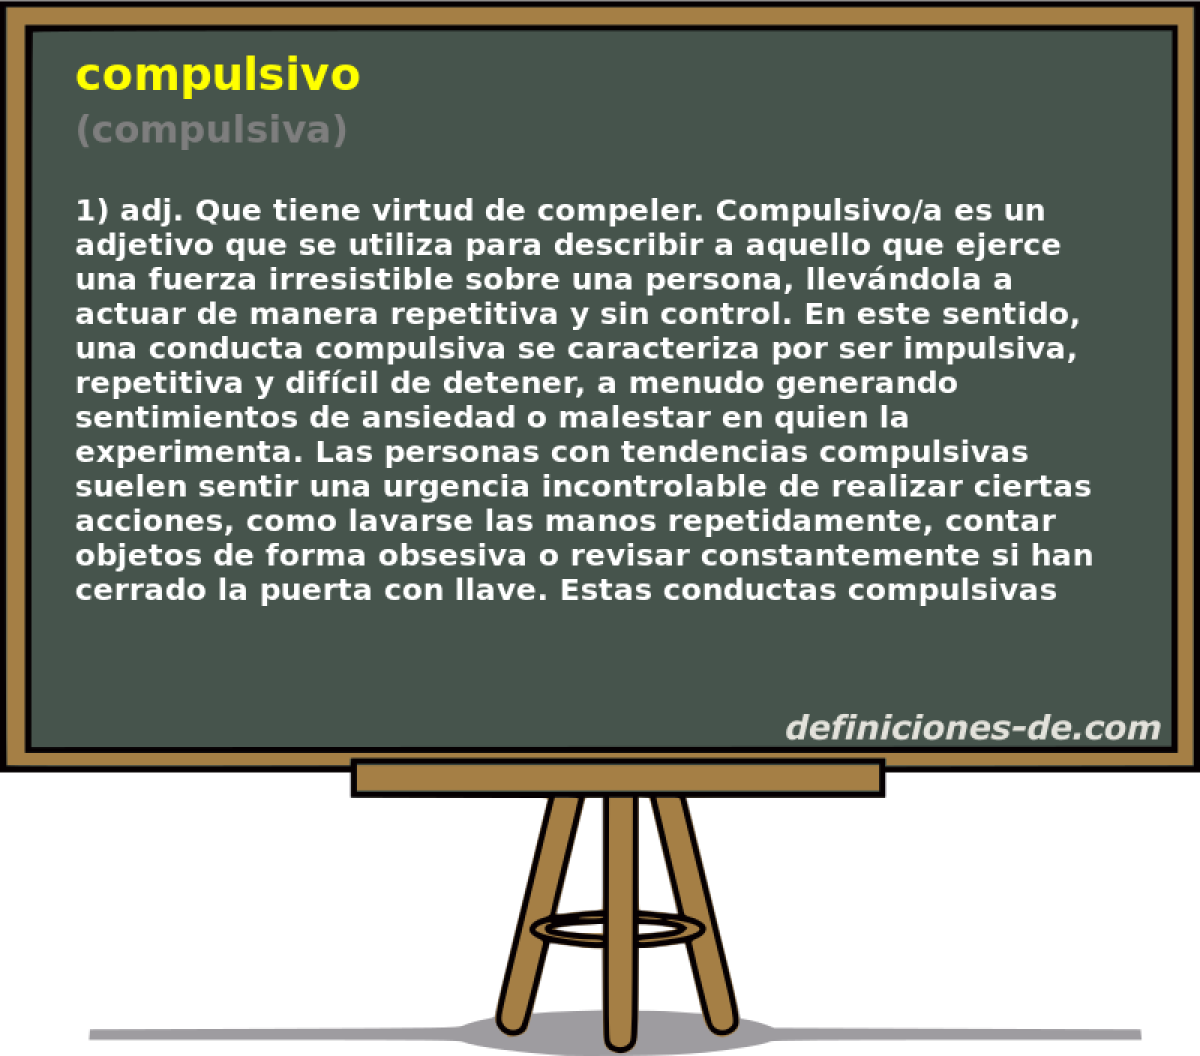 compulsivo (compulsiva)